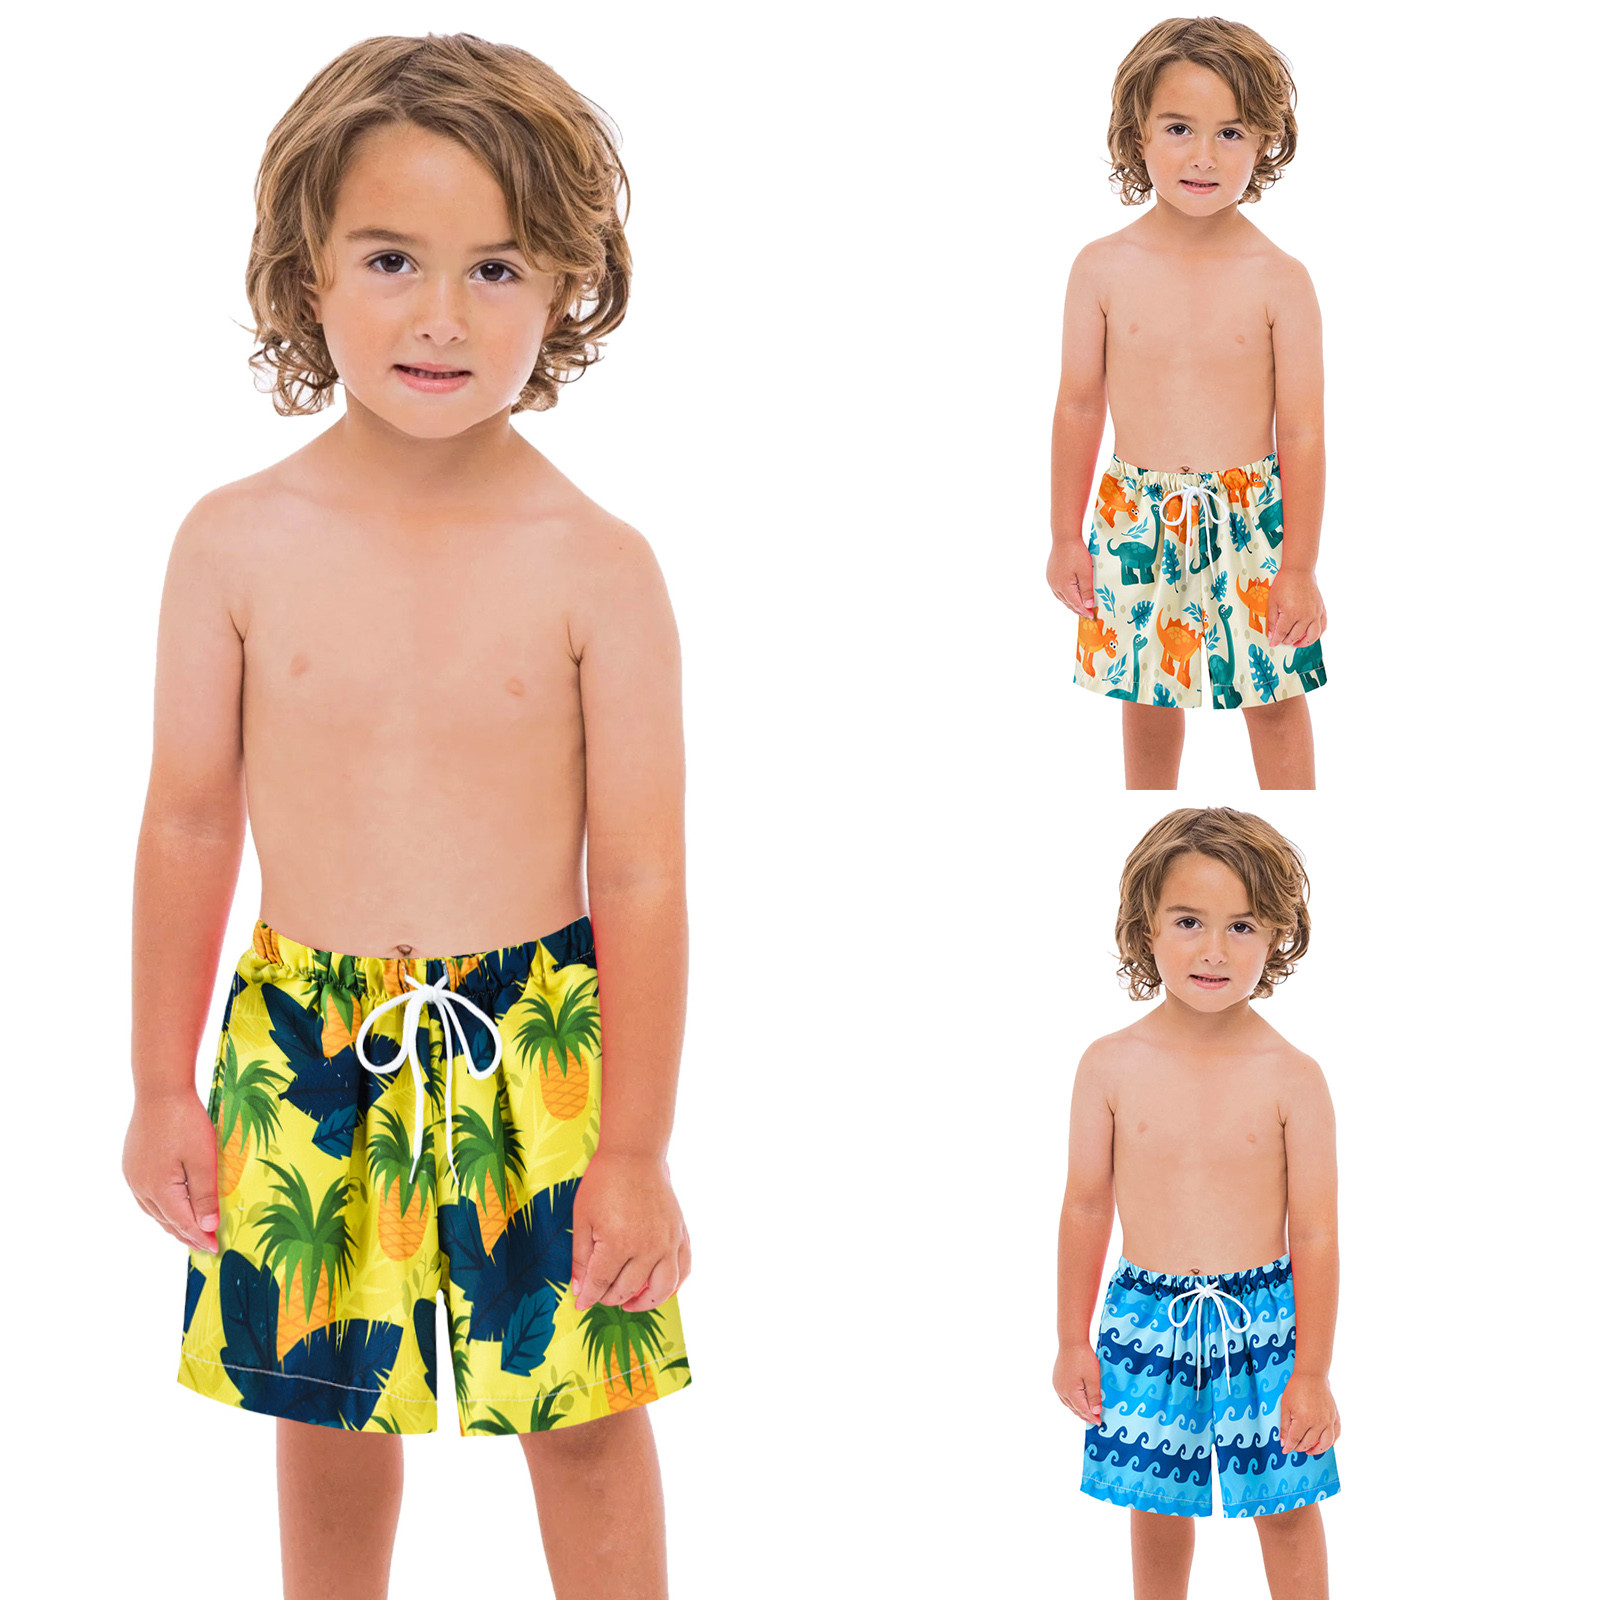 Toddler Swimsuit Boy 4t Infant Bathing 28Y Swim Toddler Boys Swimsuit Baby